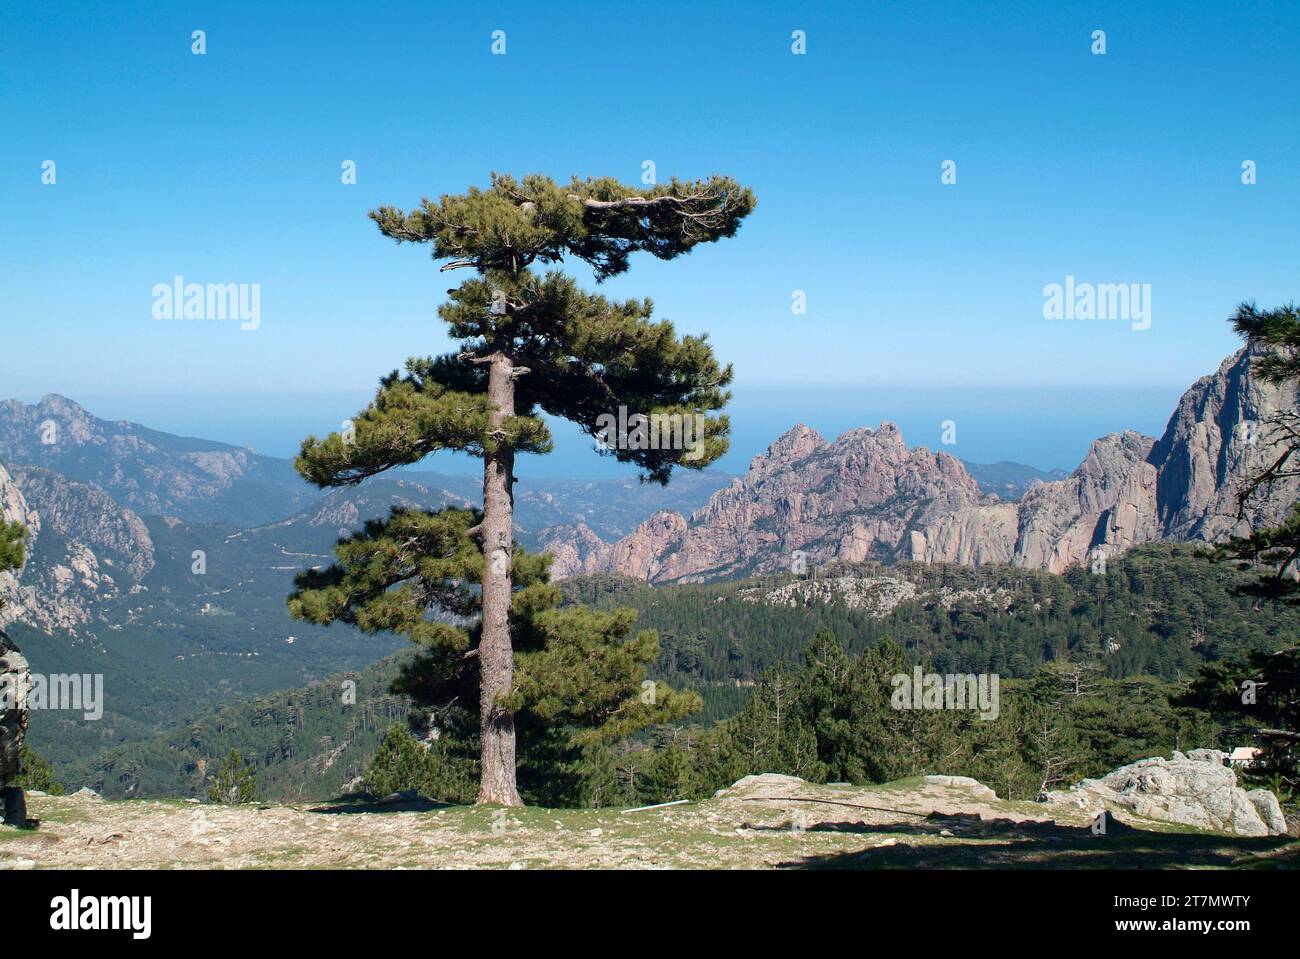 Pinus nigra corsicana or Pinus nigra salzmannii corsicana is an evergreen tree native to Corsica. This photo was taken in Col of Bavella, Corsica, Fra Stock Photo